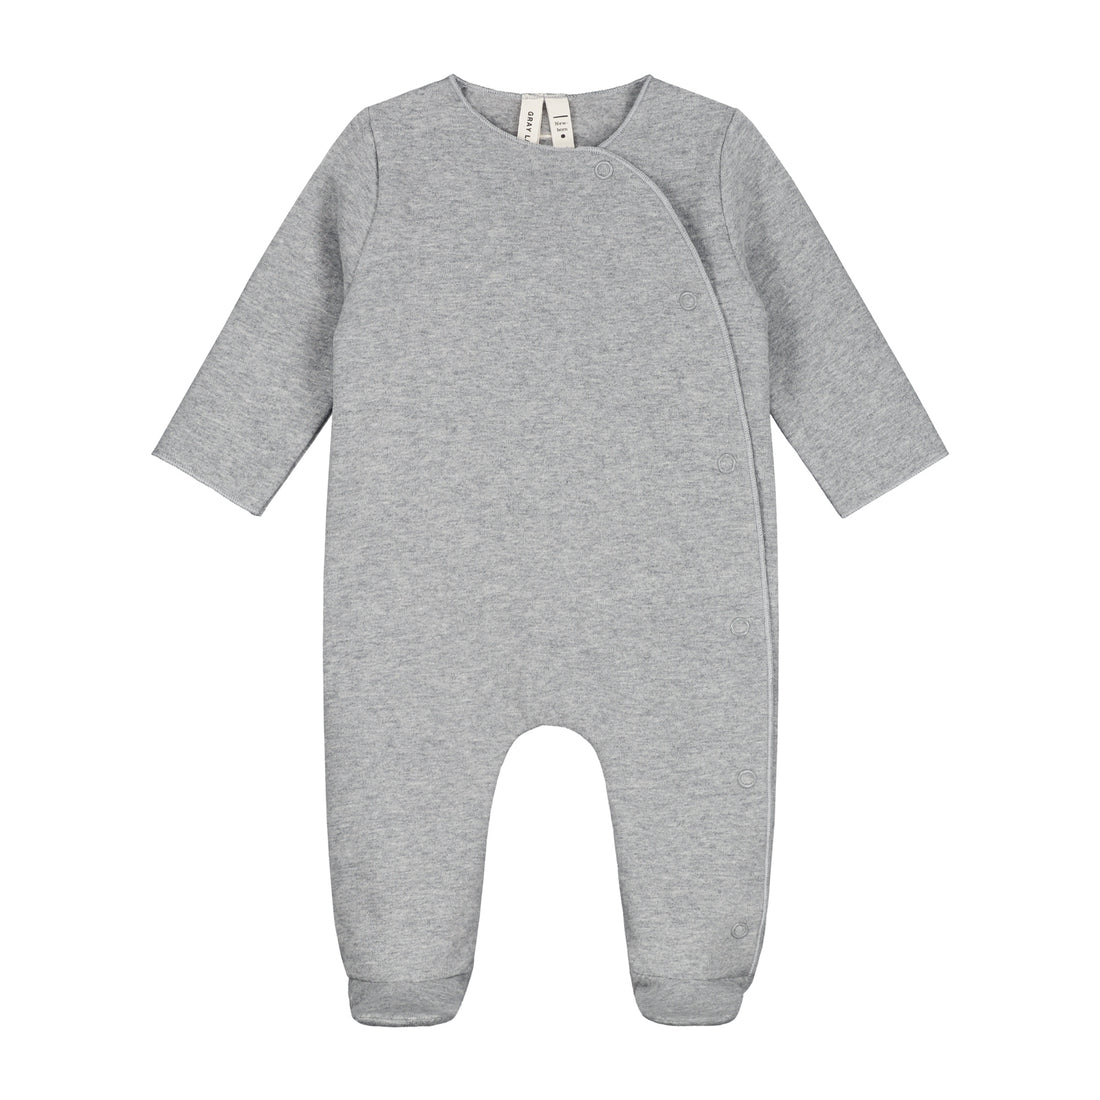 baby newborn suit with snaps grey melange